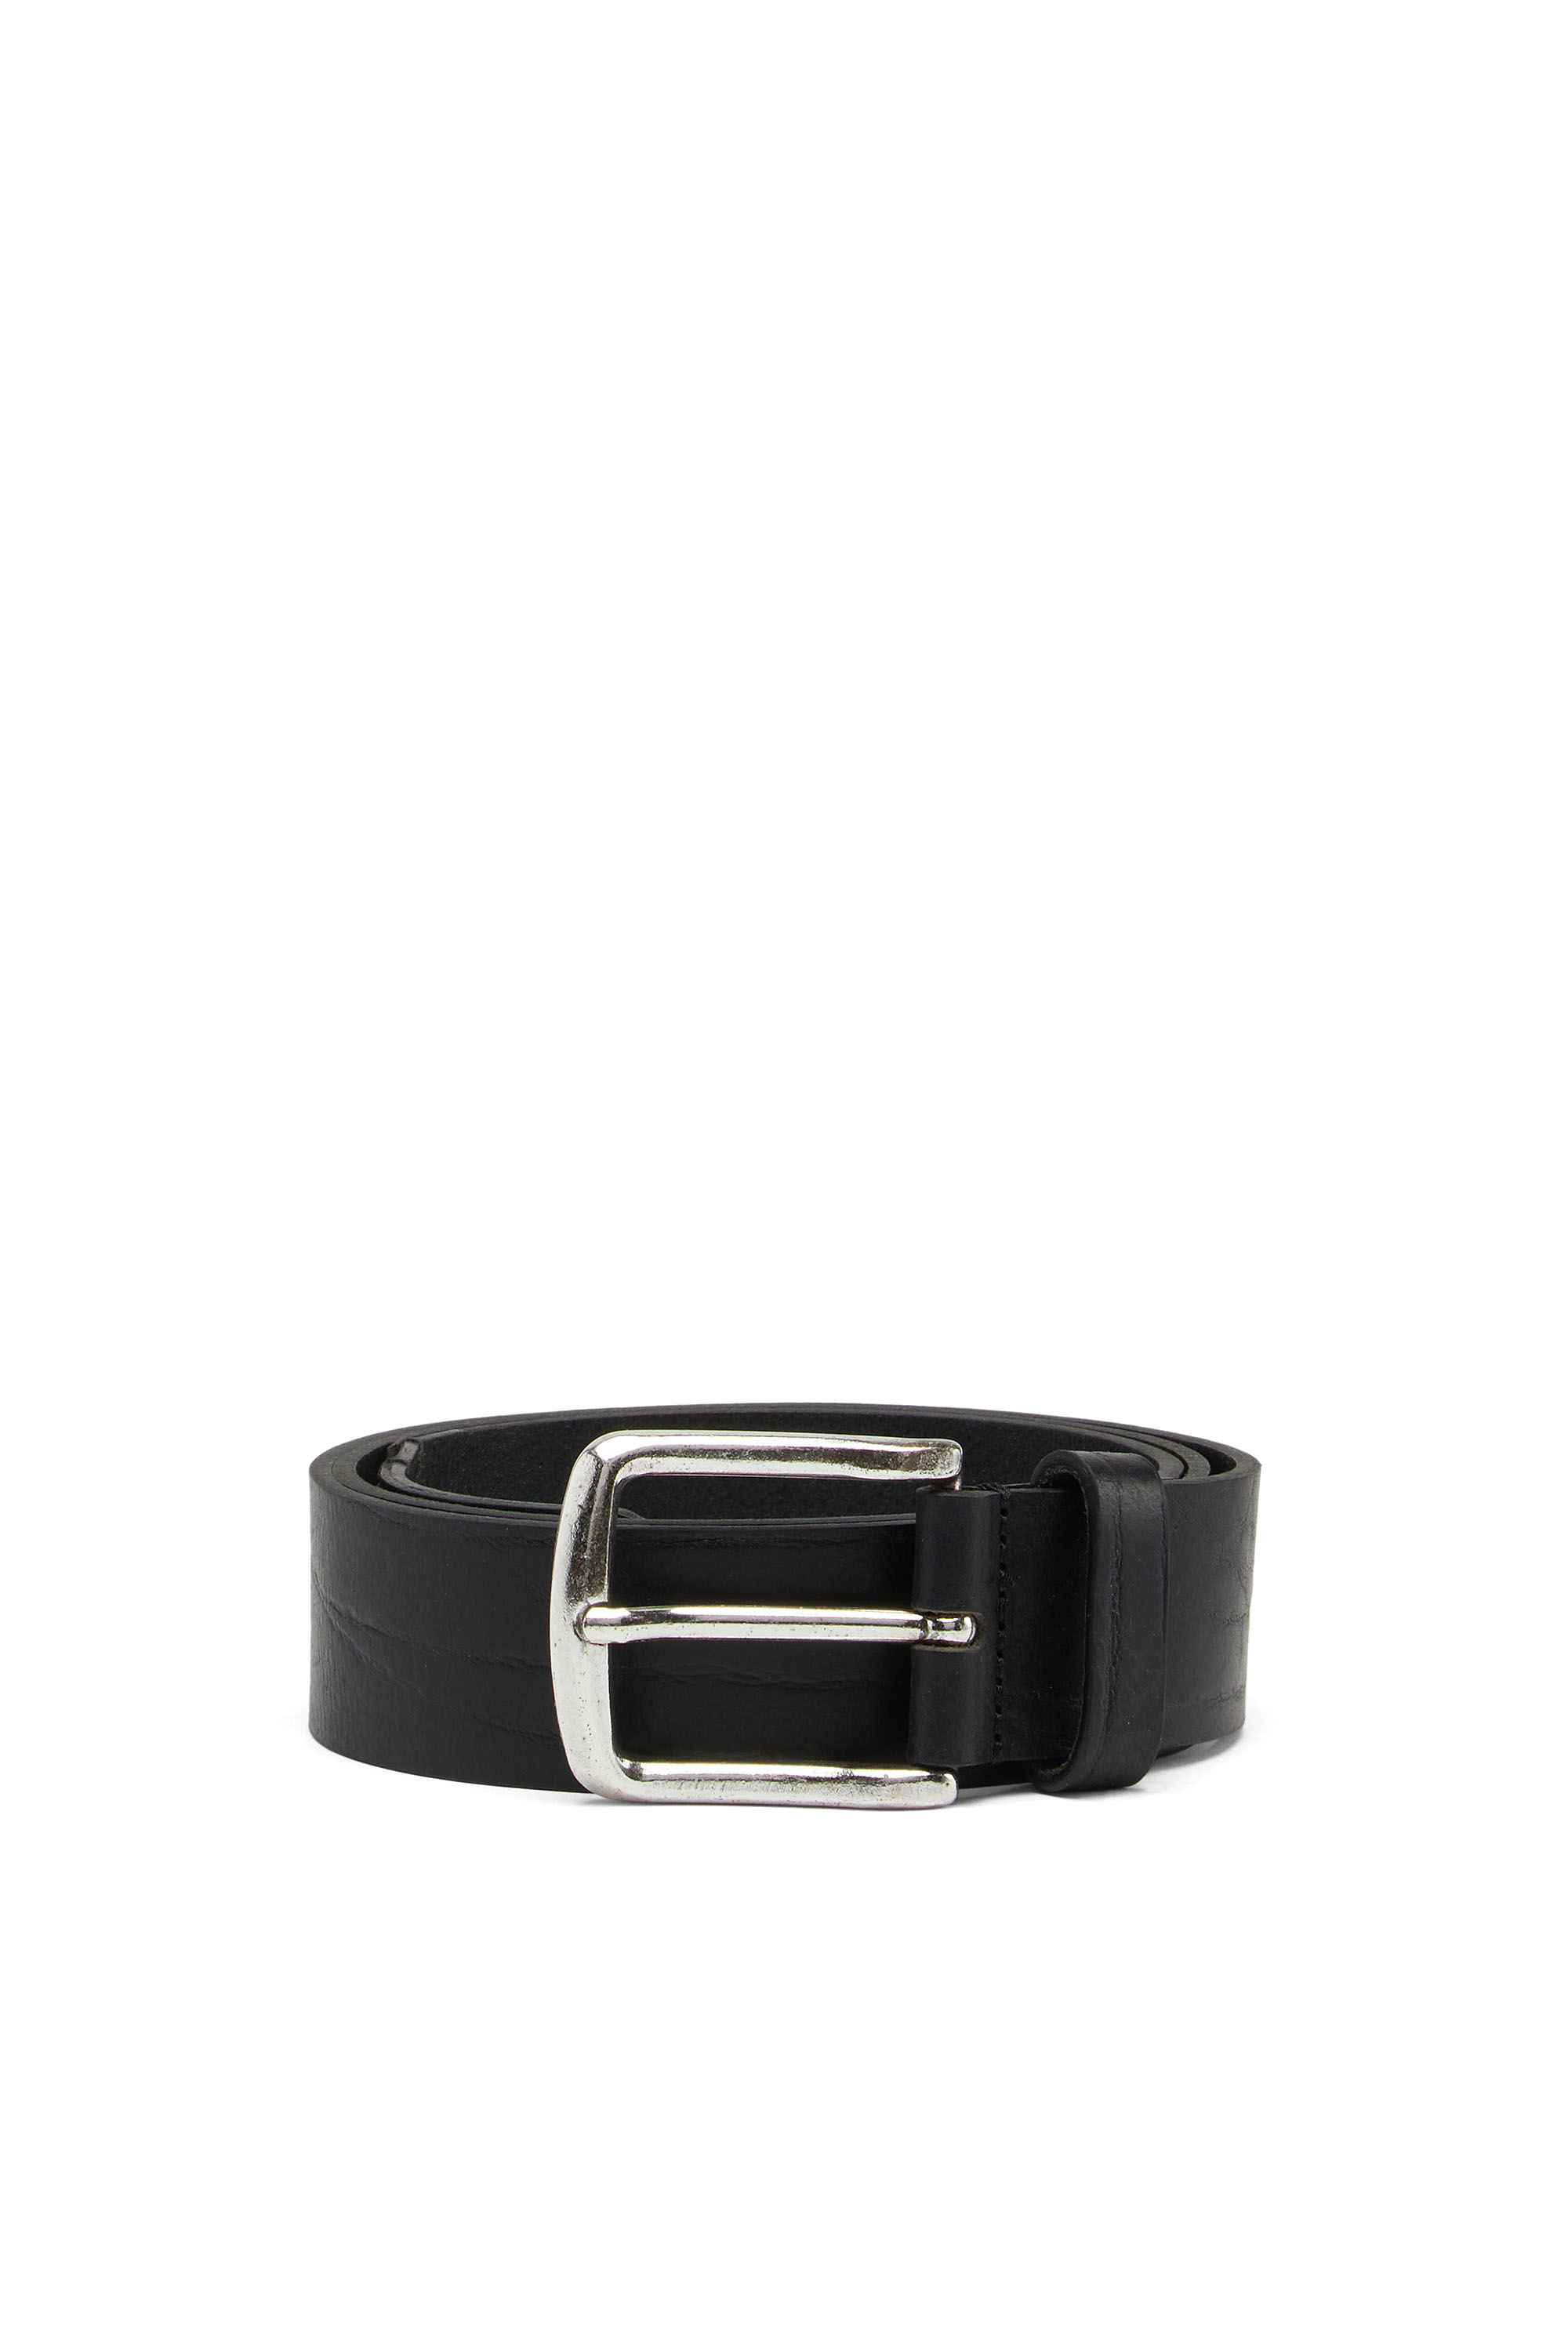 Diesel - Treated leather belt with diesel logo - Belts - Man - Black